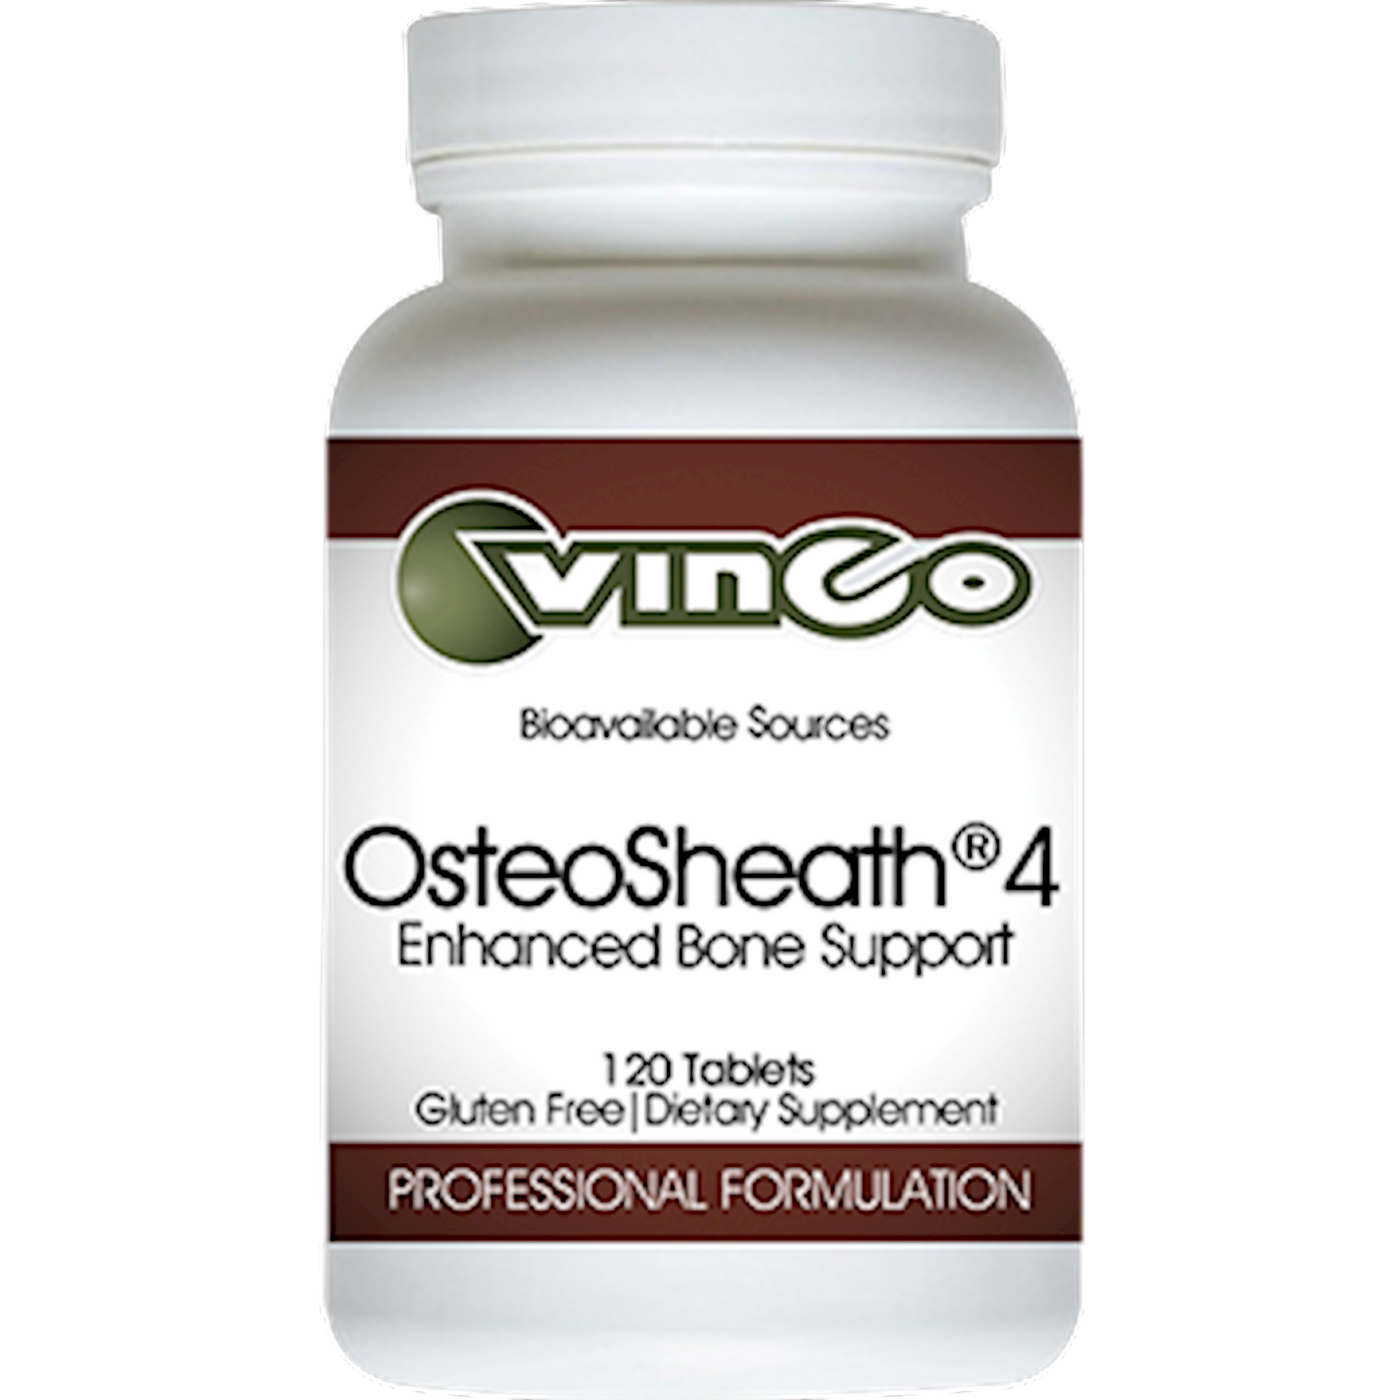 OsteoSheath4  Curated Wellness